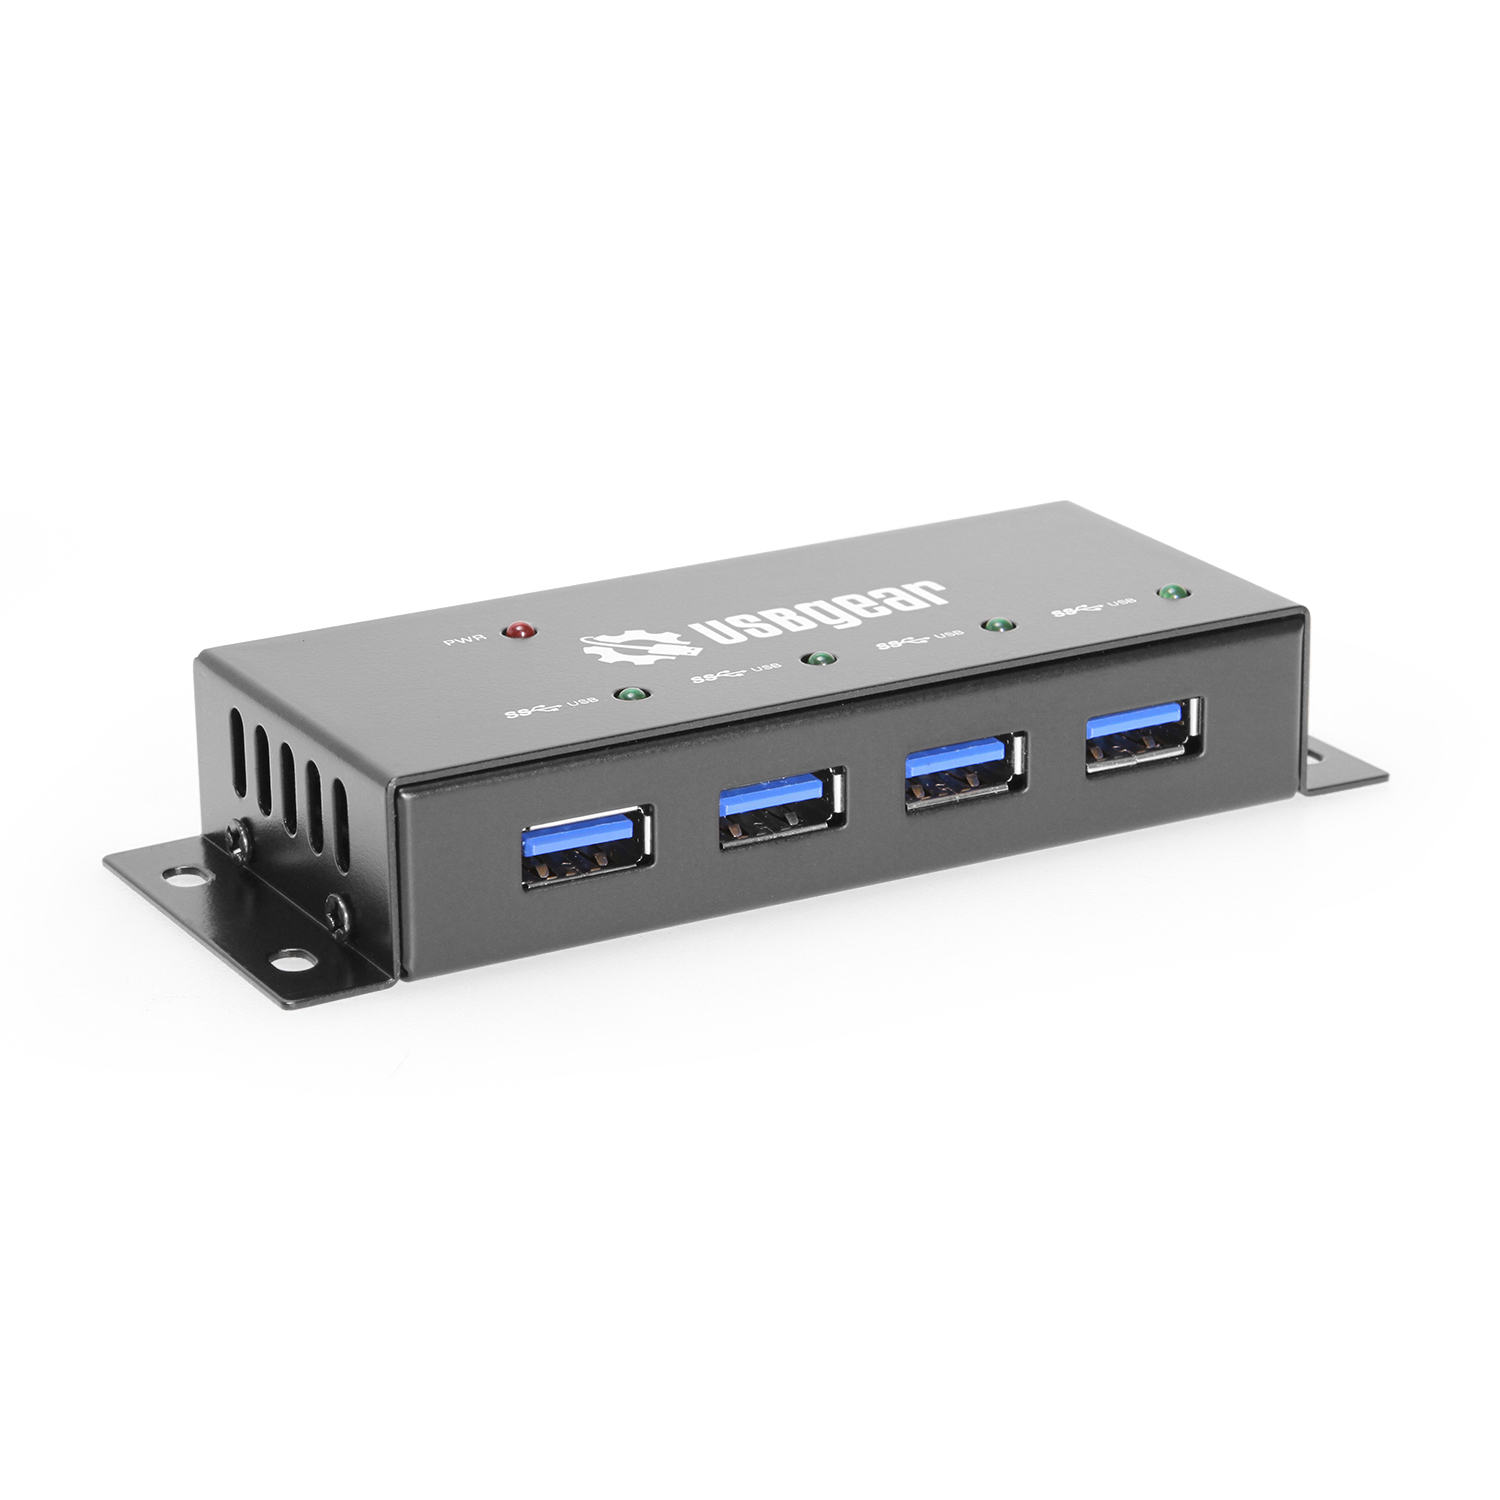 4 Ports Powered USB 3.0 Hub